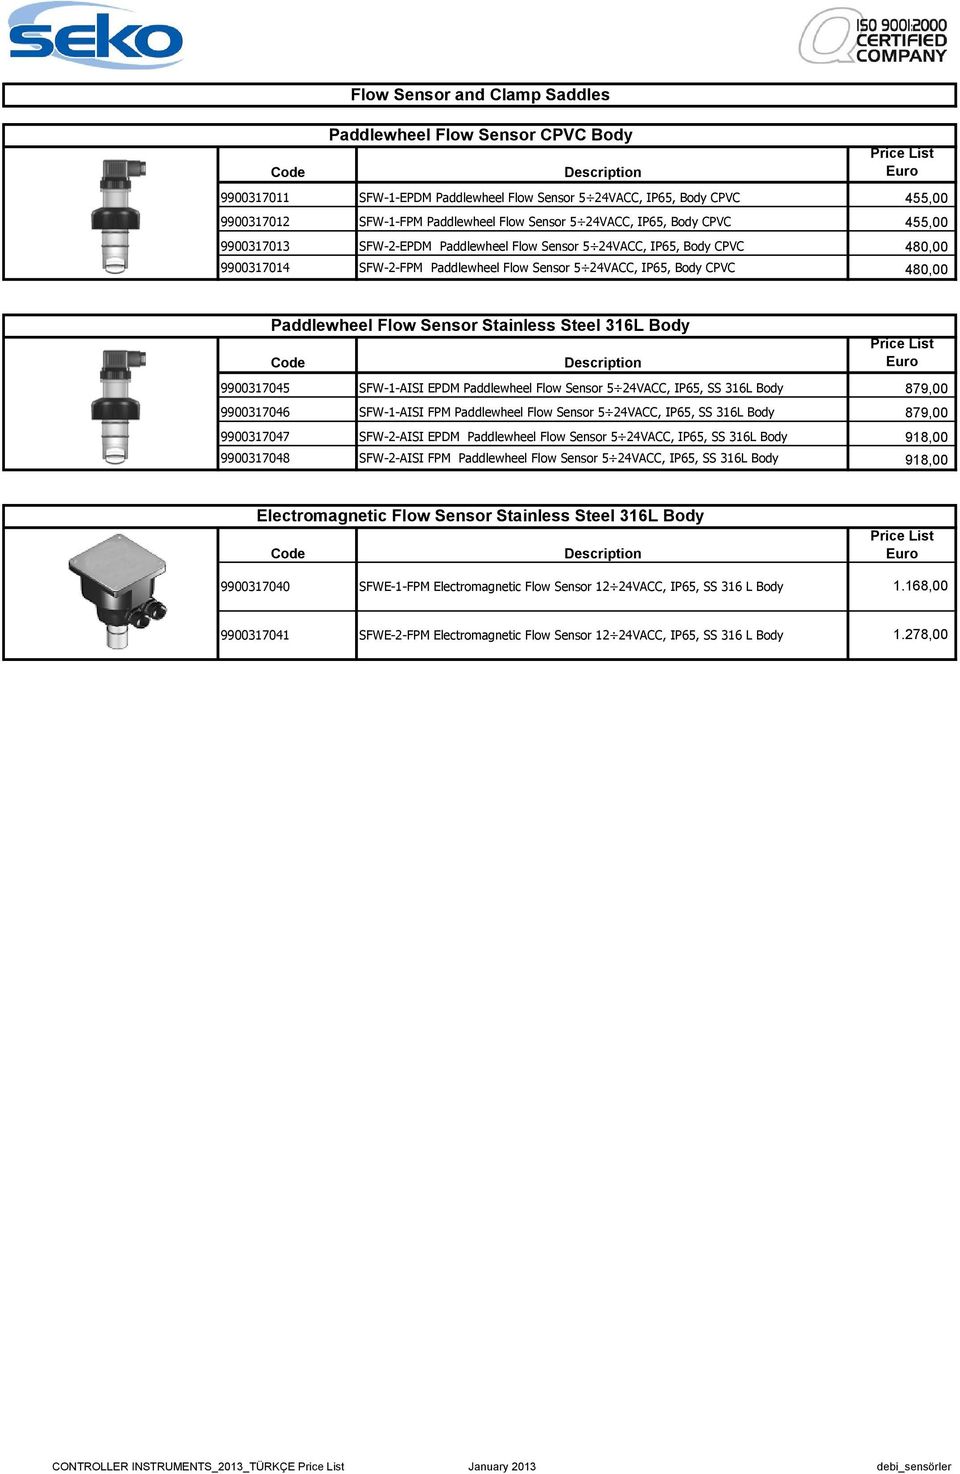 Paddlewheel Flow Sensor Stainless Steel 316L Body Price List 9900317045 SFW-1-AISI EPDM Paddlewheel Flow Sensor 5 24VACC, IP65, SS 316L Body 879,00 9900317046 SFW-1-AISI FPM Paddlewheel Flow Sensor 5